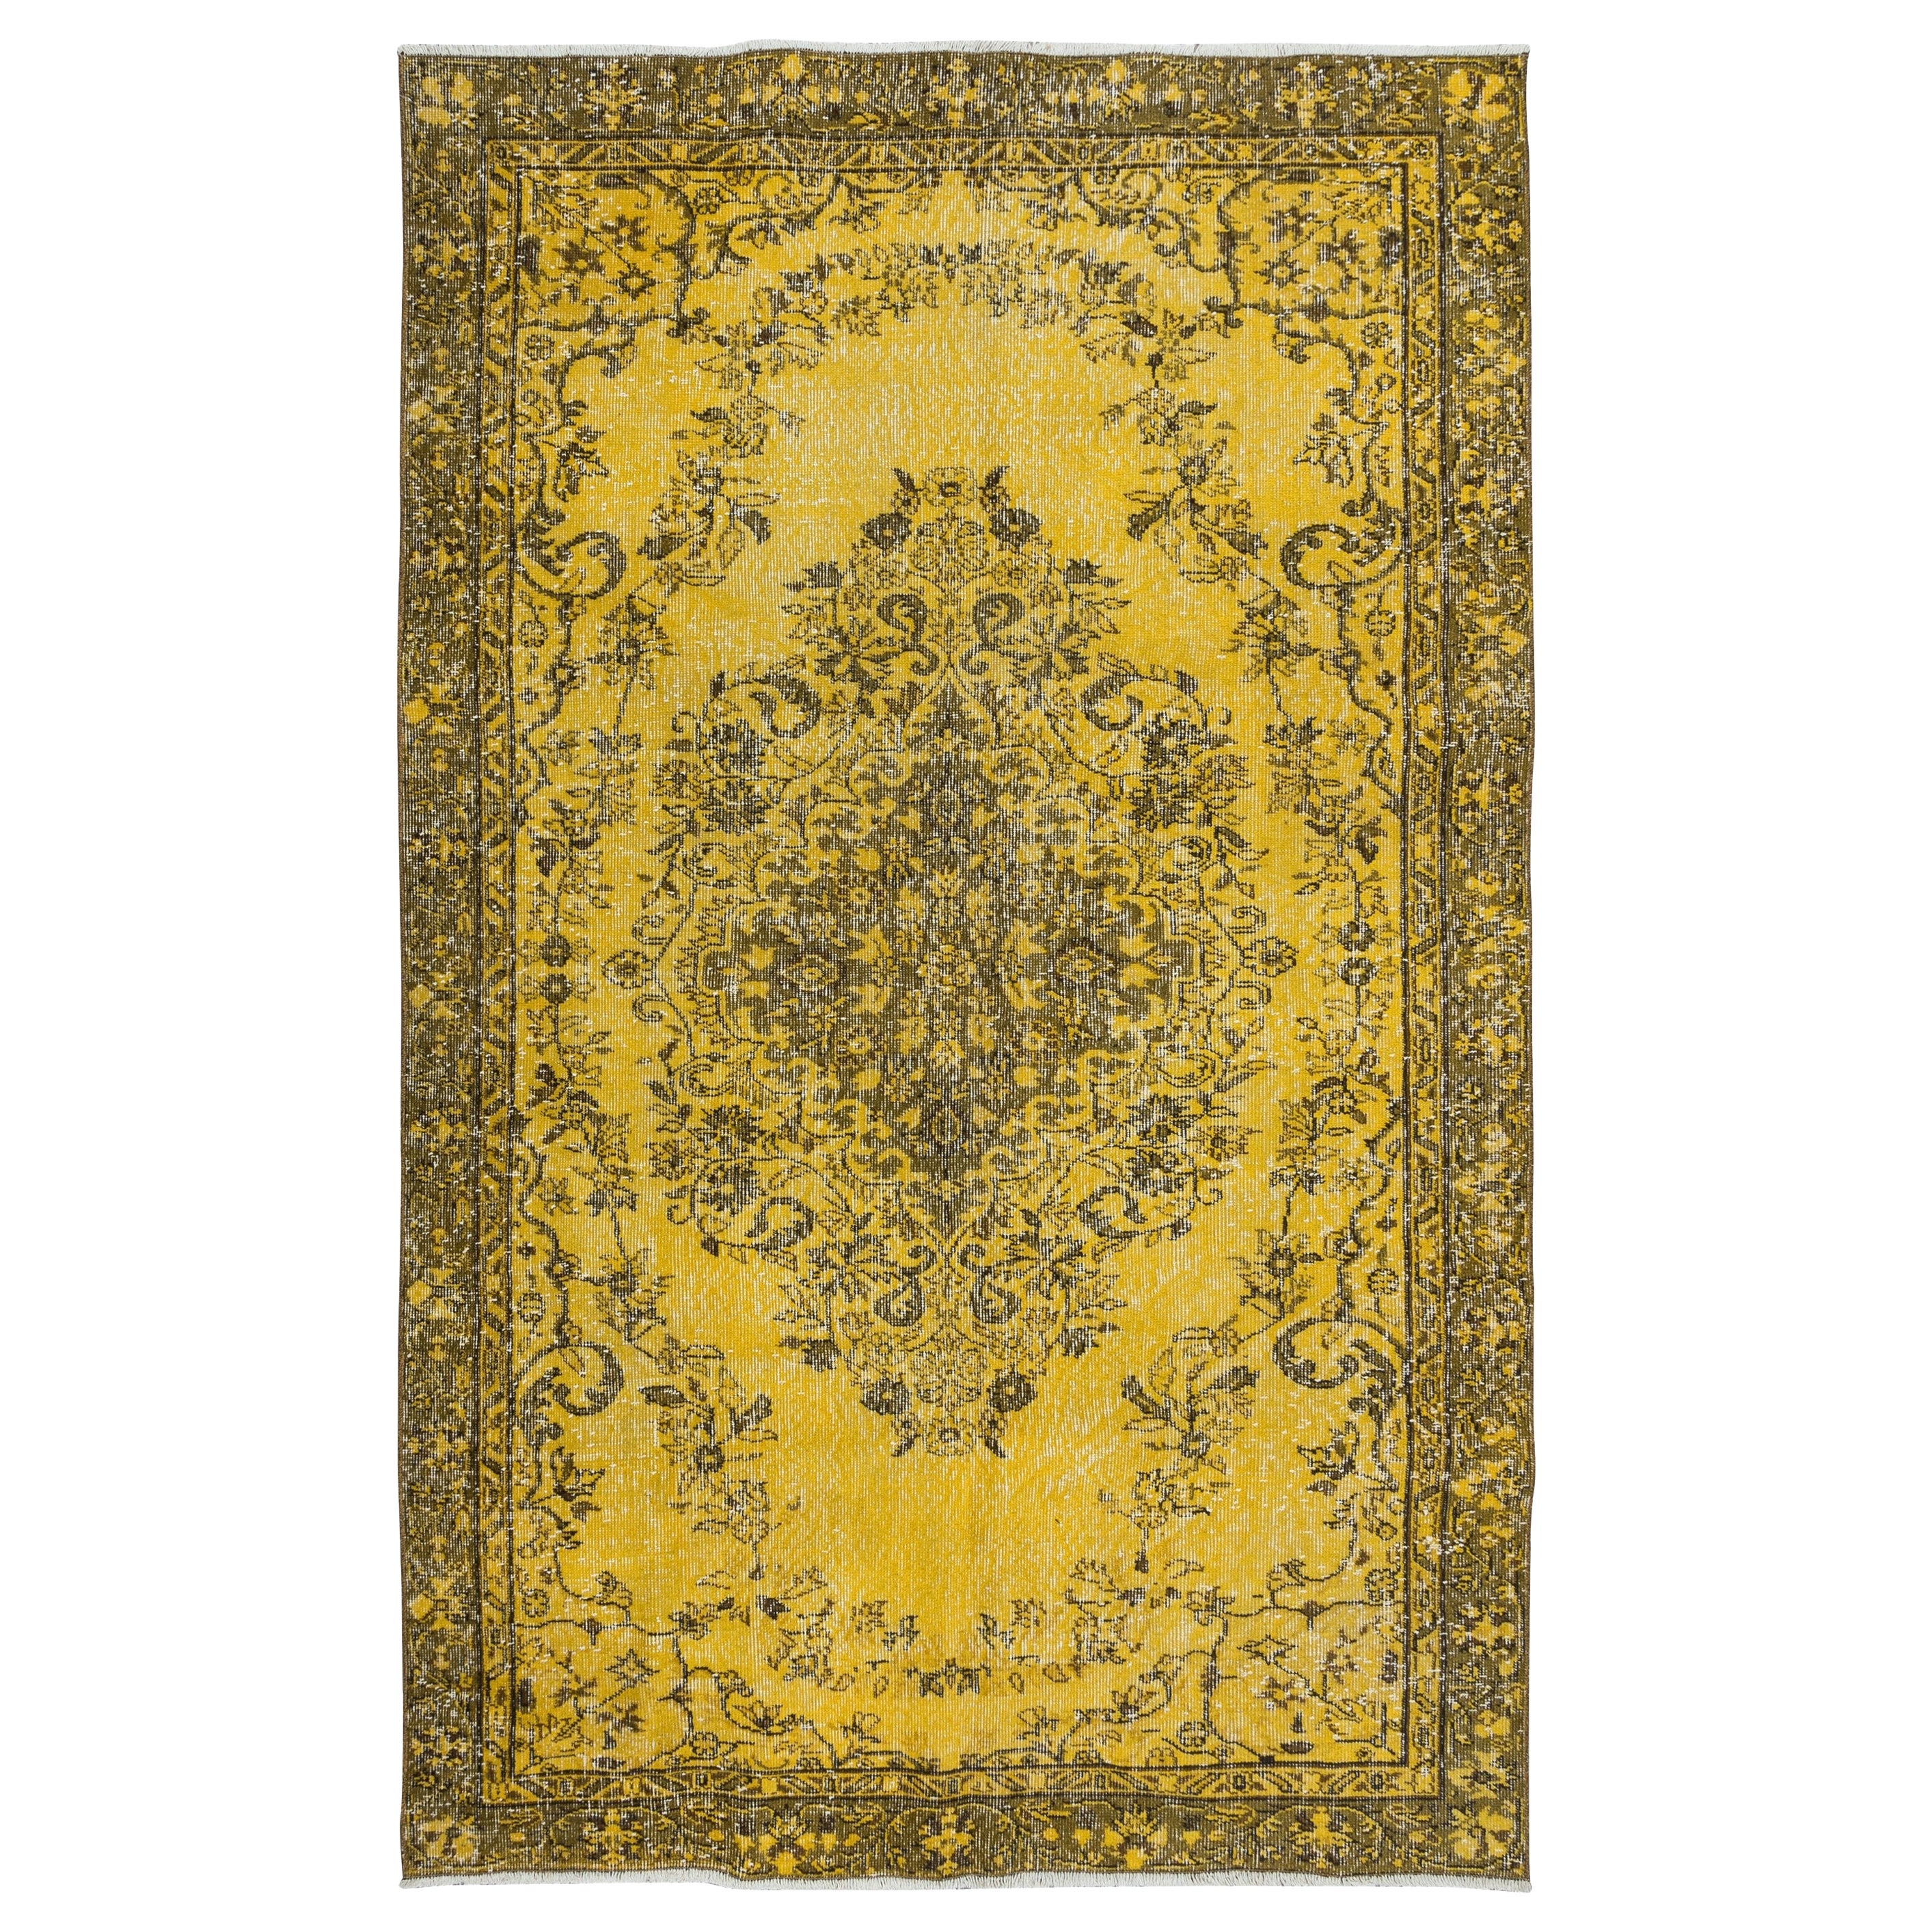 5.4x8.4 Ft Yellow Handmade Area Rug with Medallion Design, Living Room Carpet